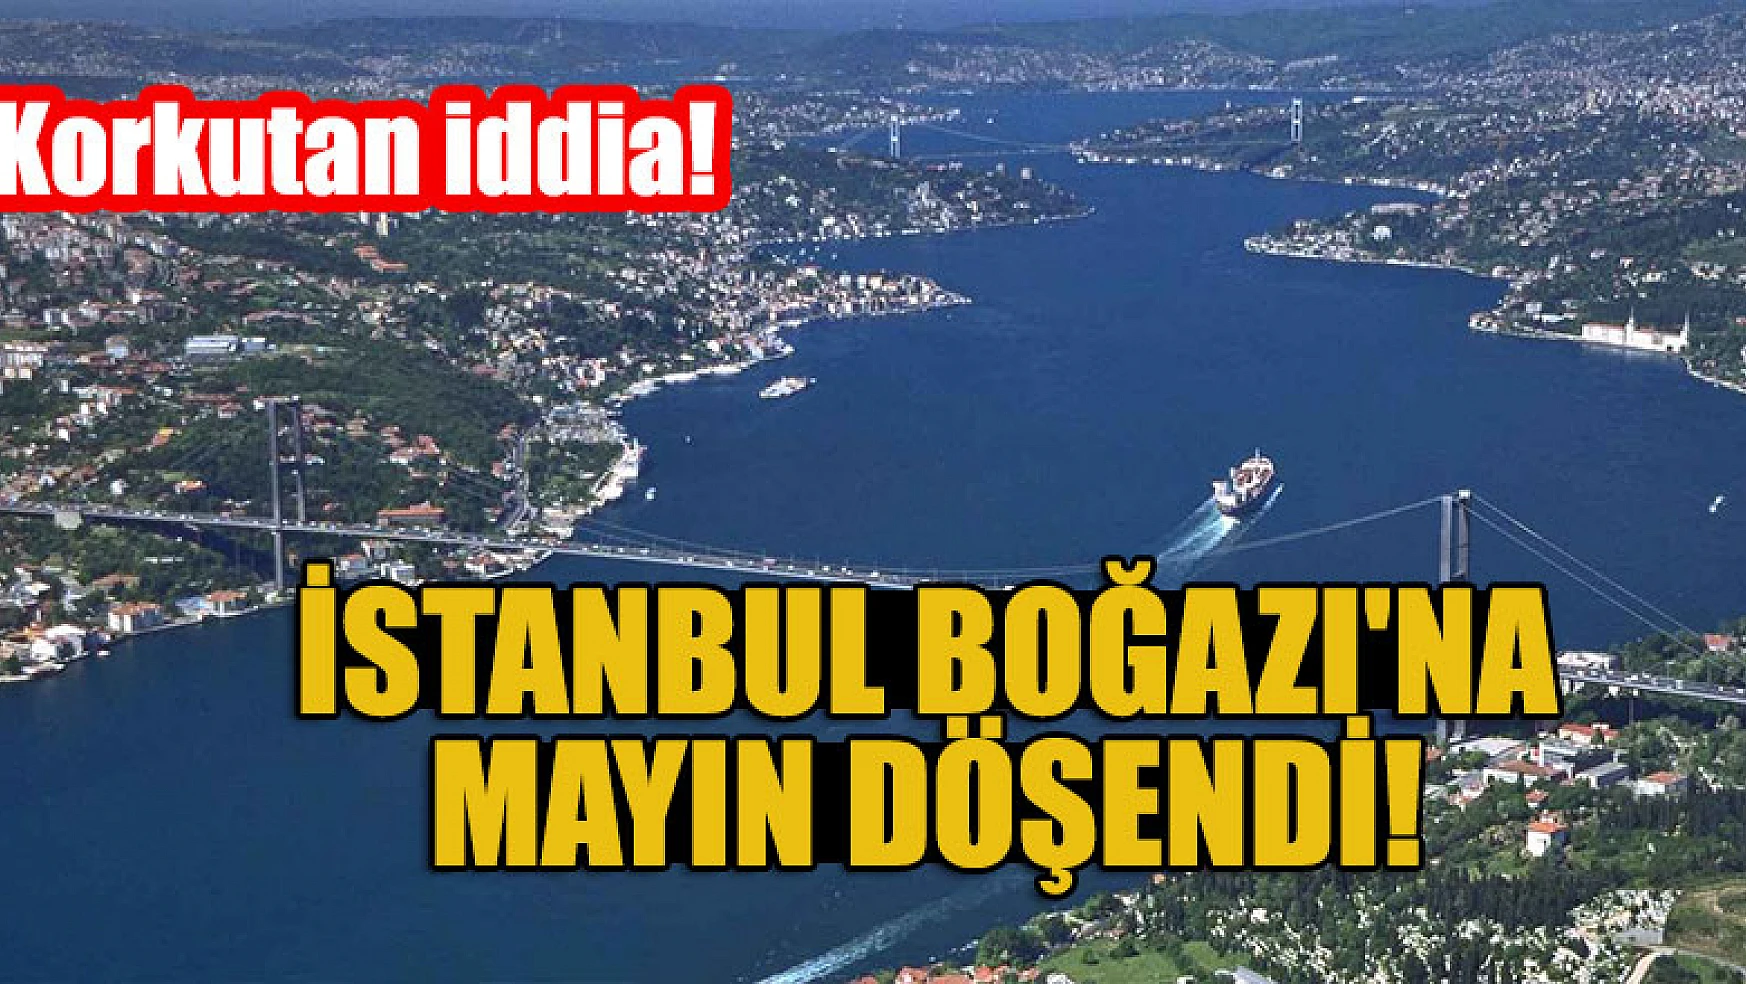 Korkutan iddia! İstanbul Boğazı'na mayın döşendi!